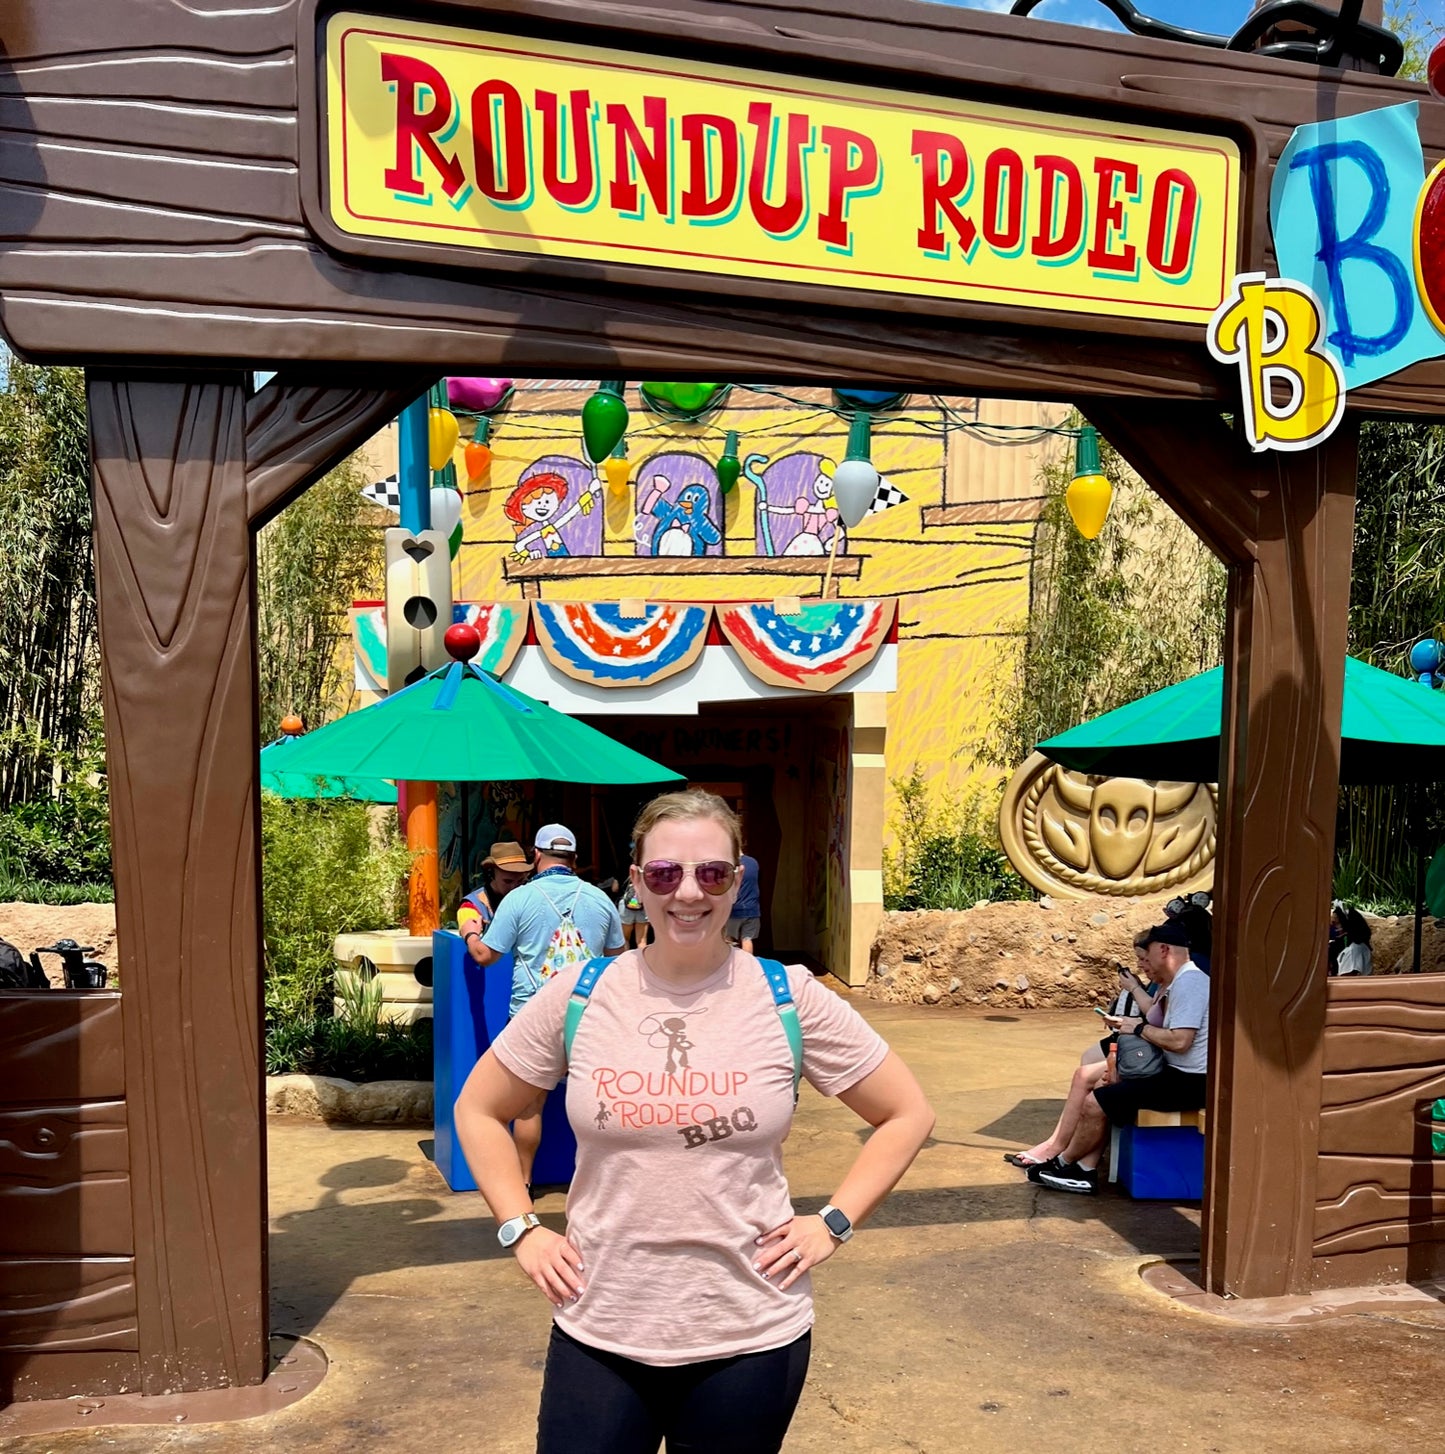 Roundup Rodeo BBQ Inspired T-shirt